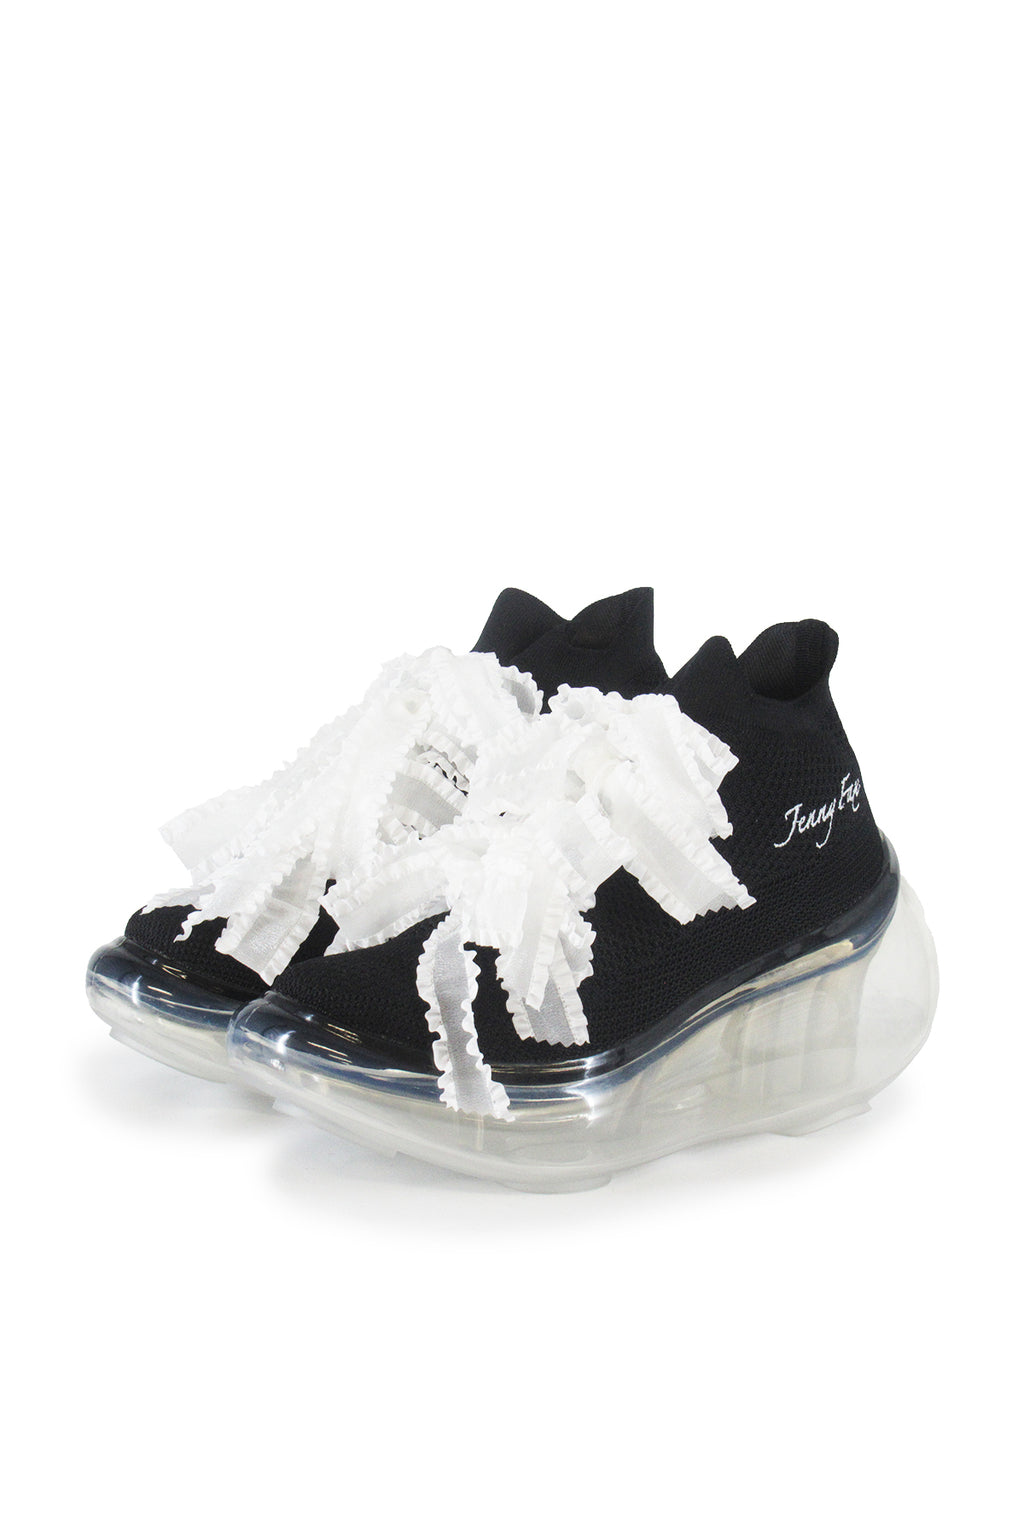 JennyFax Web Limited Items Shoes – MIKIOSAKABE & JennyFax 